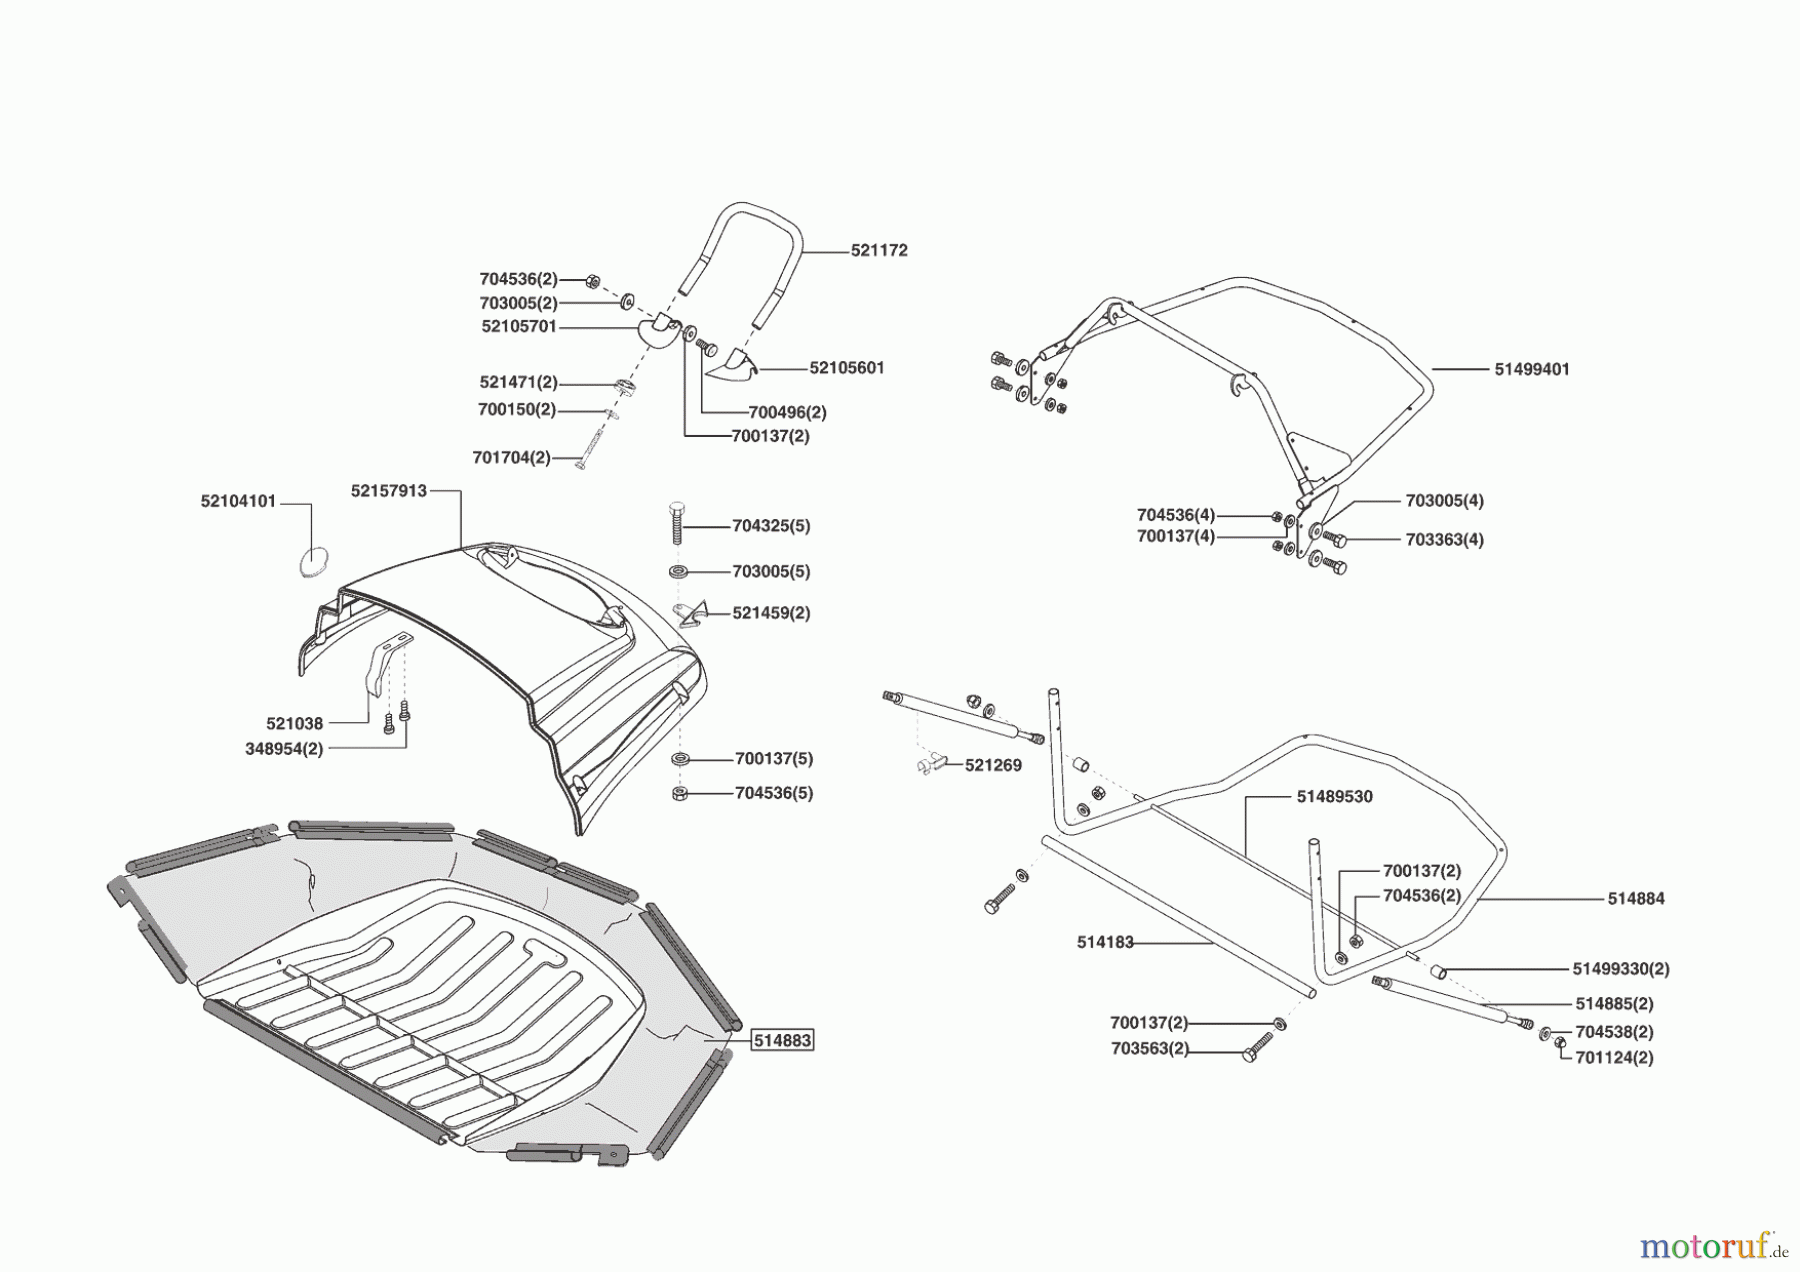  AL-KO Gartentechnik Rasentraktor T18/102HD MARINA Seite 7